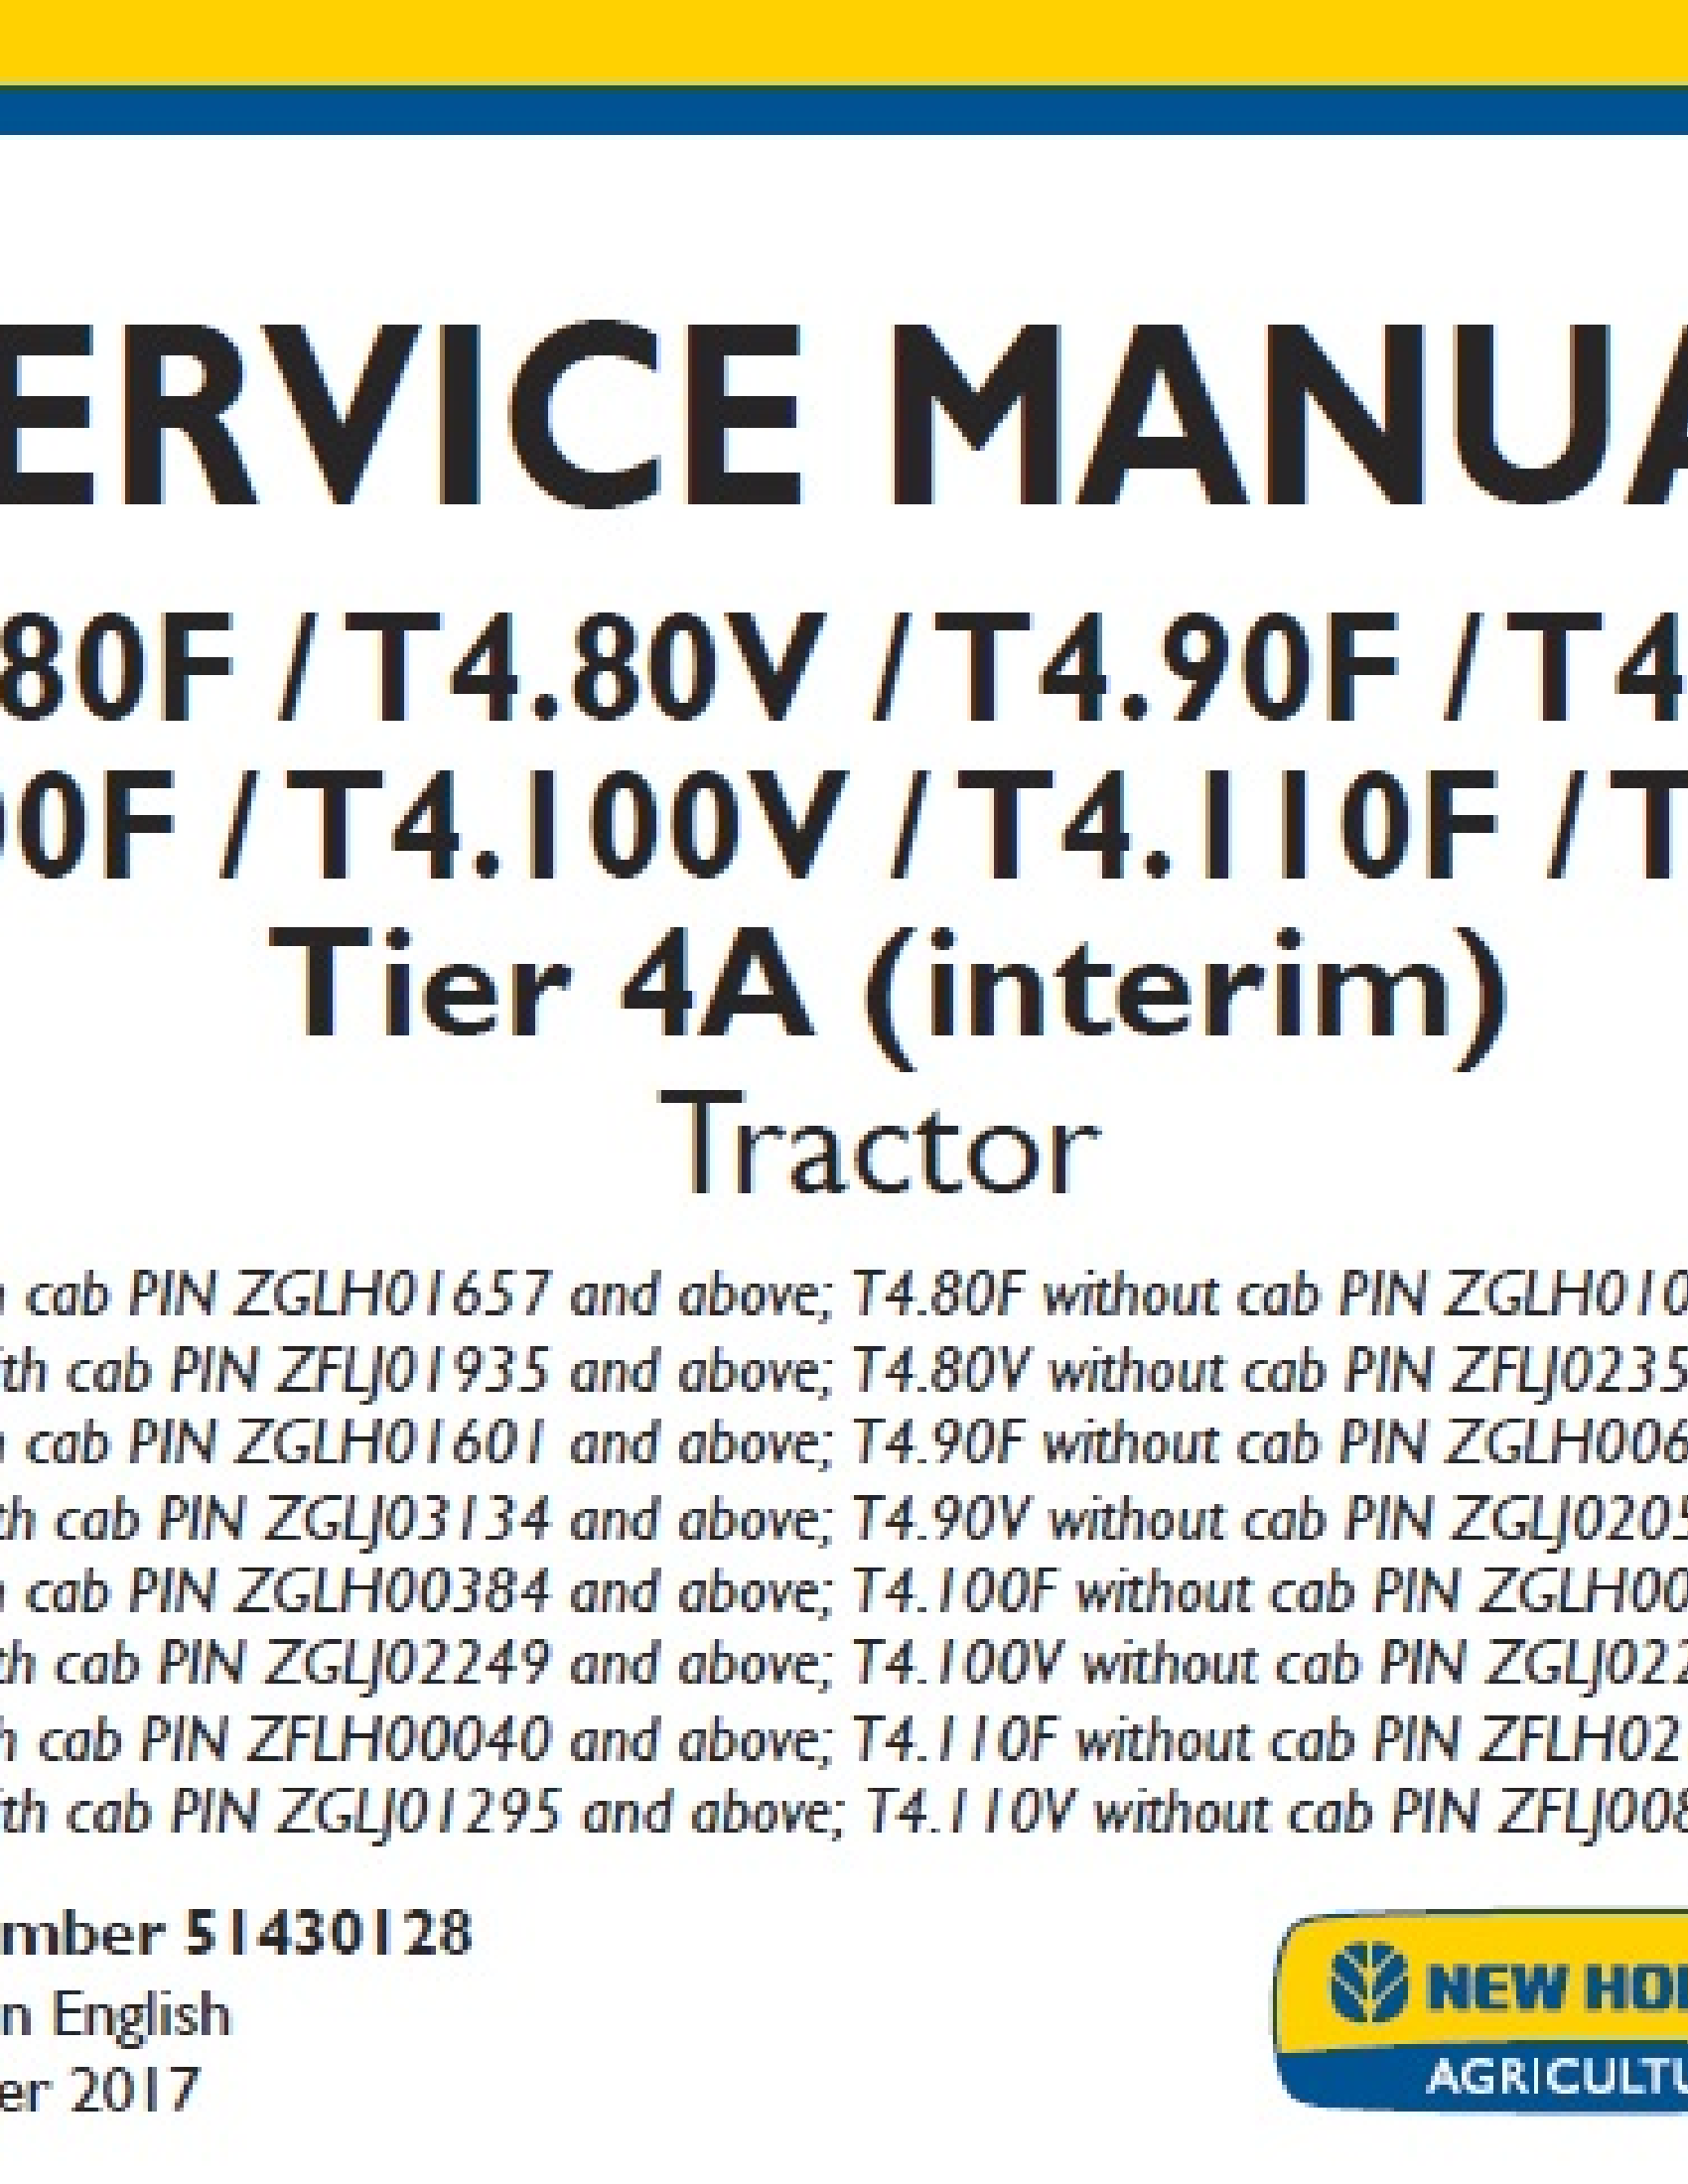 New Holland T4.80F Tier (interim) Tractor manual